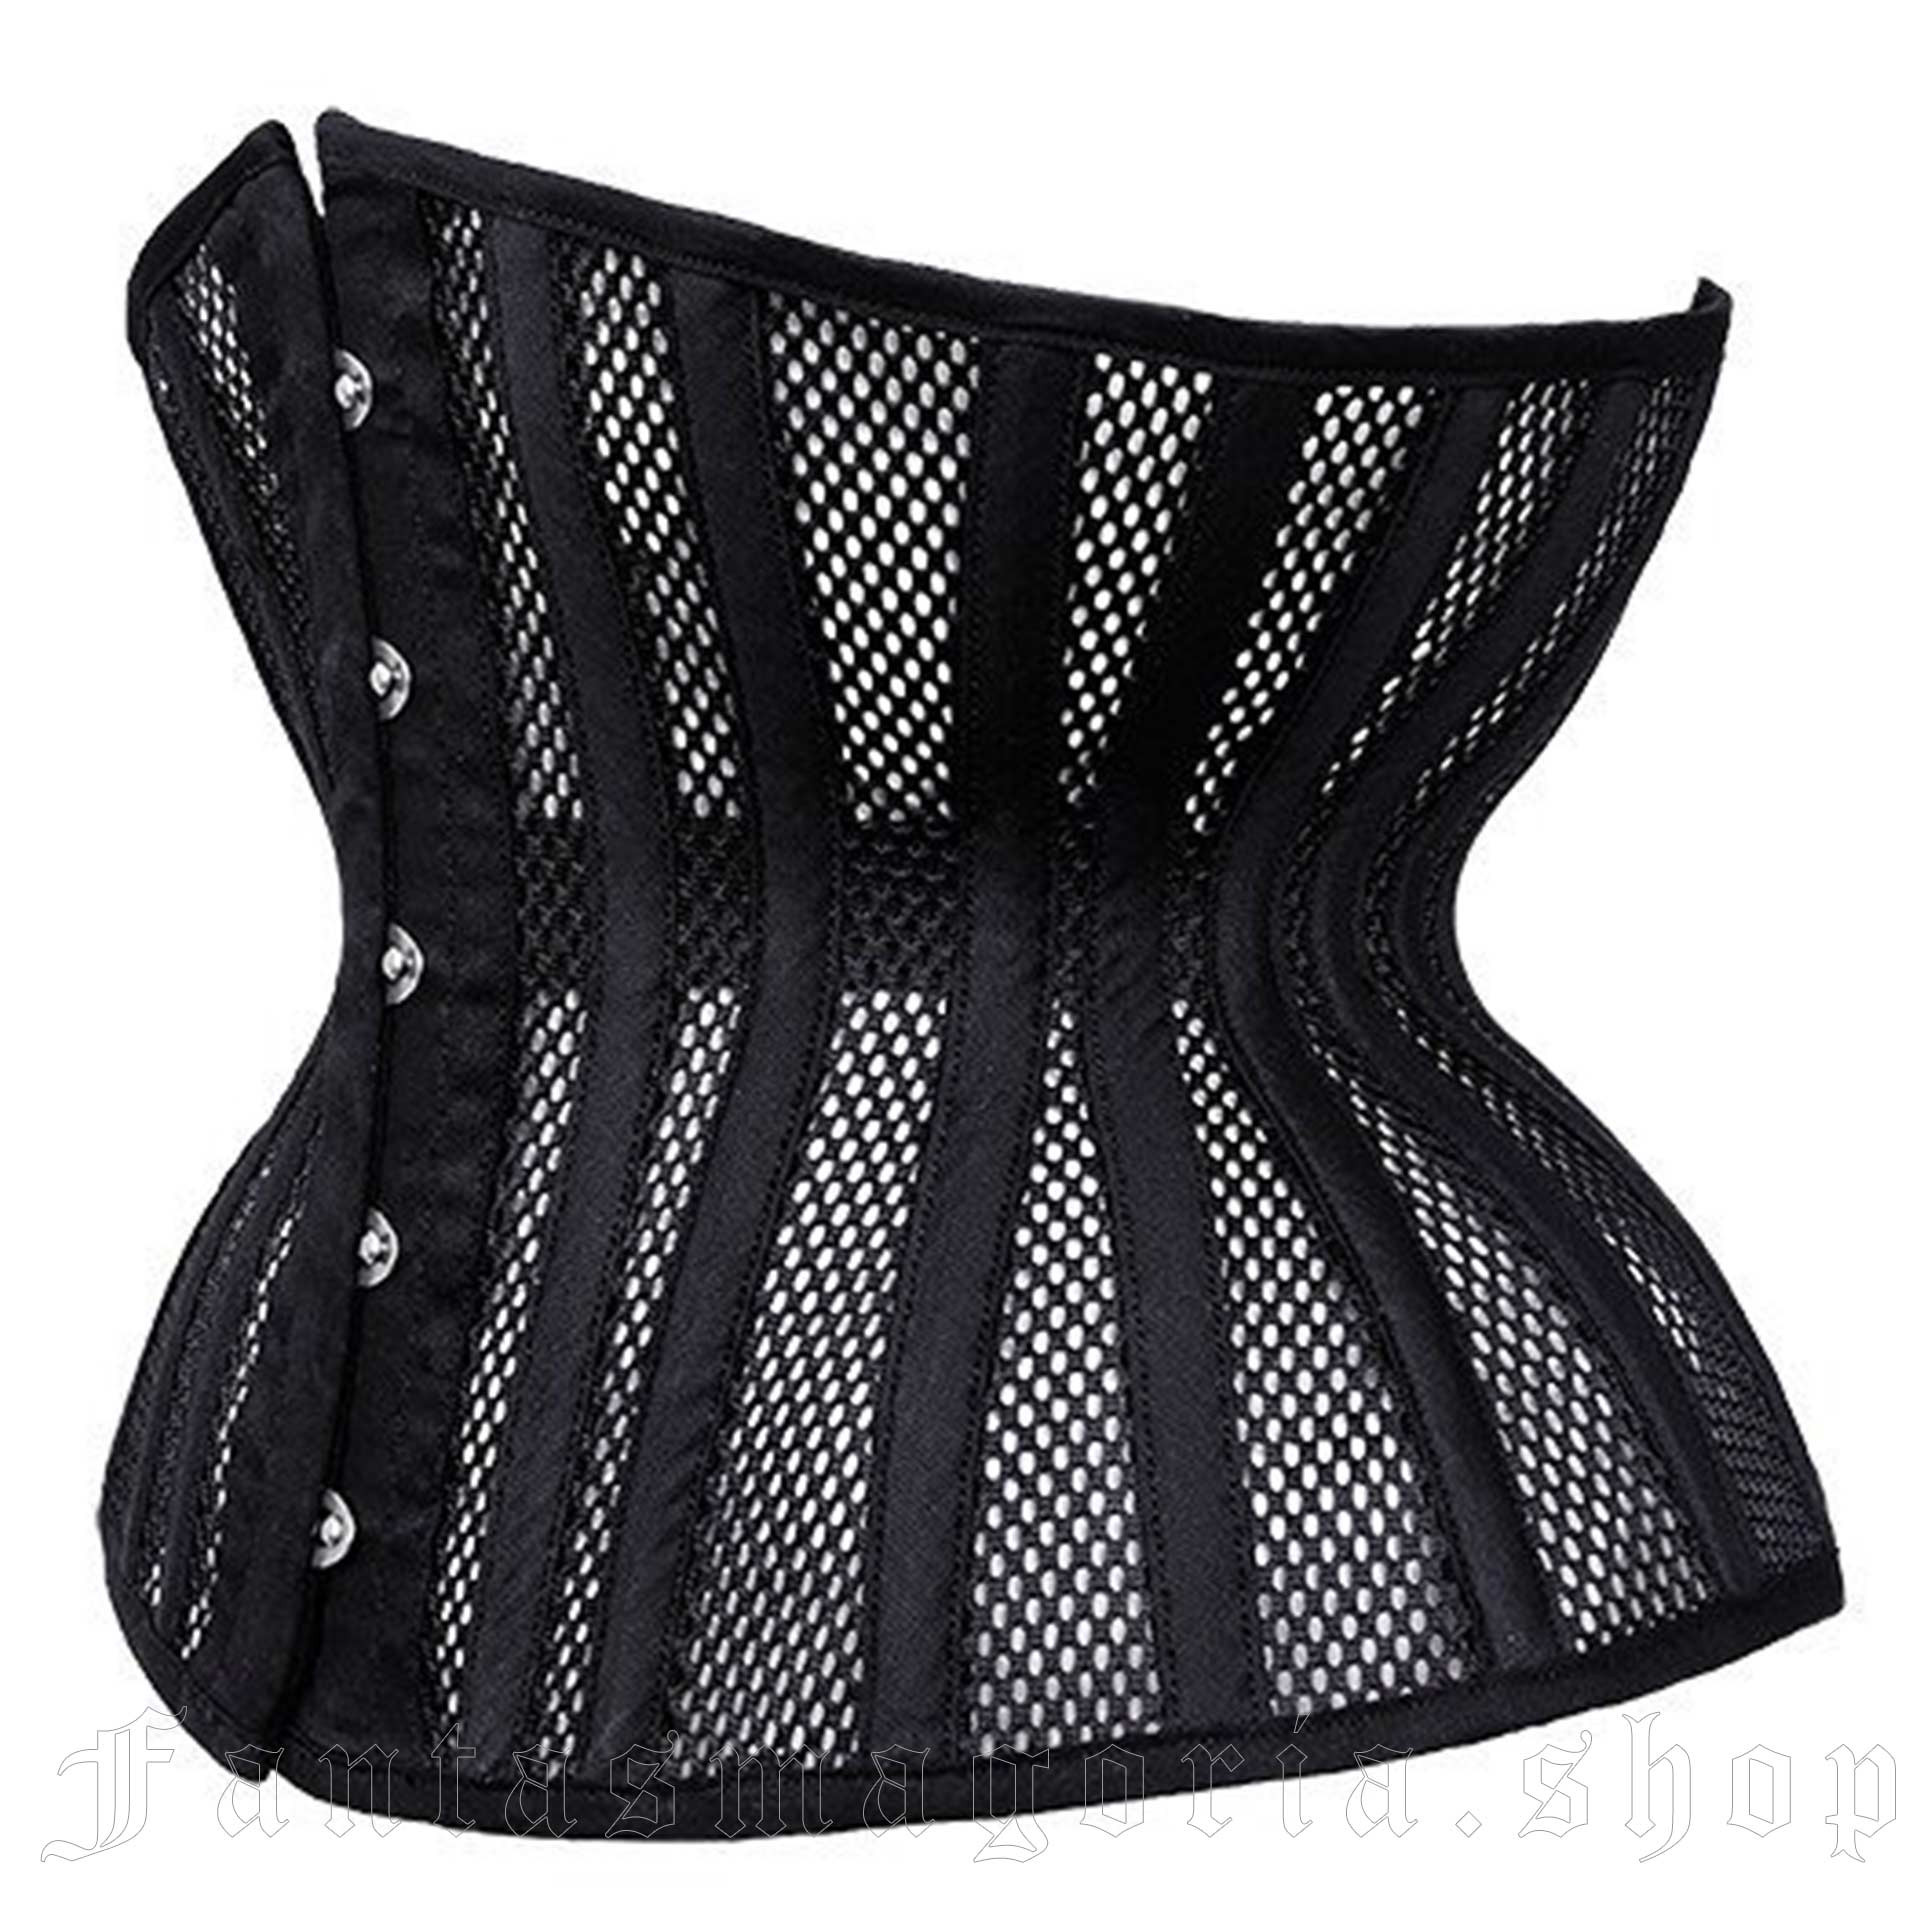 Women`s Gothic hourglass underbust corset.